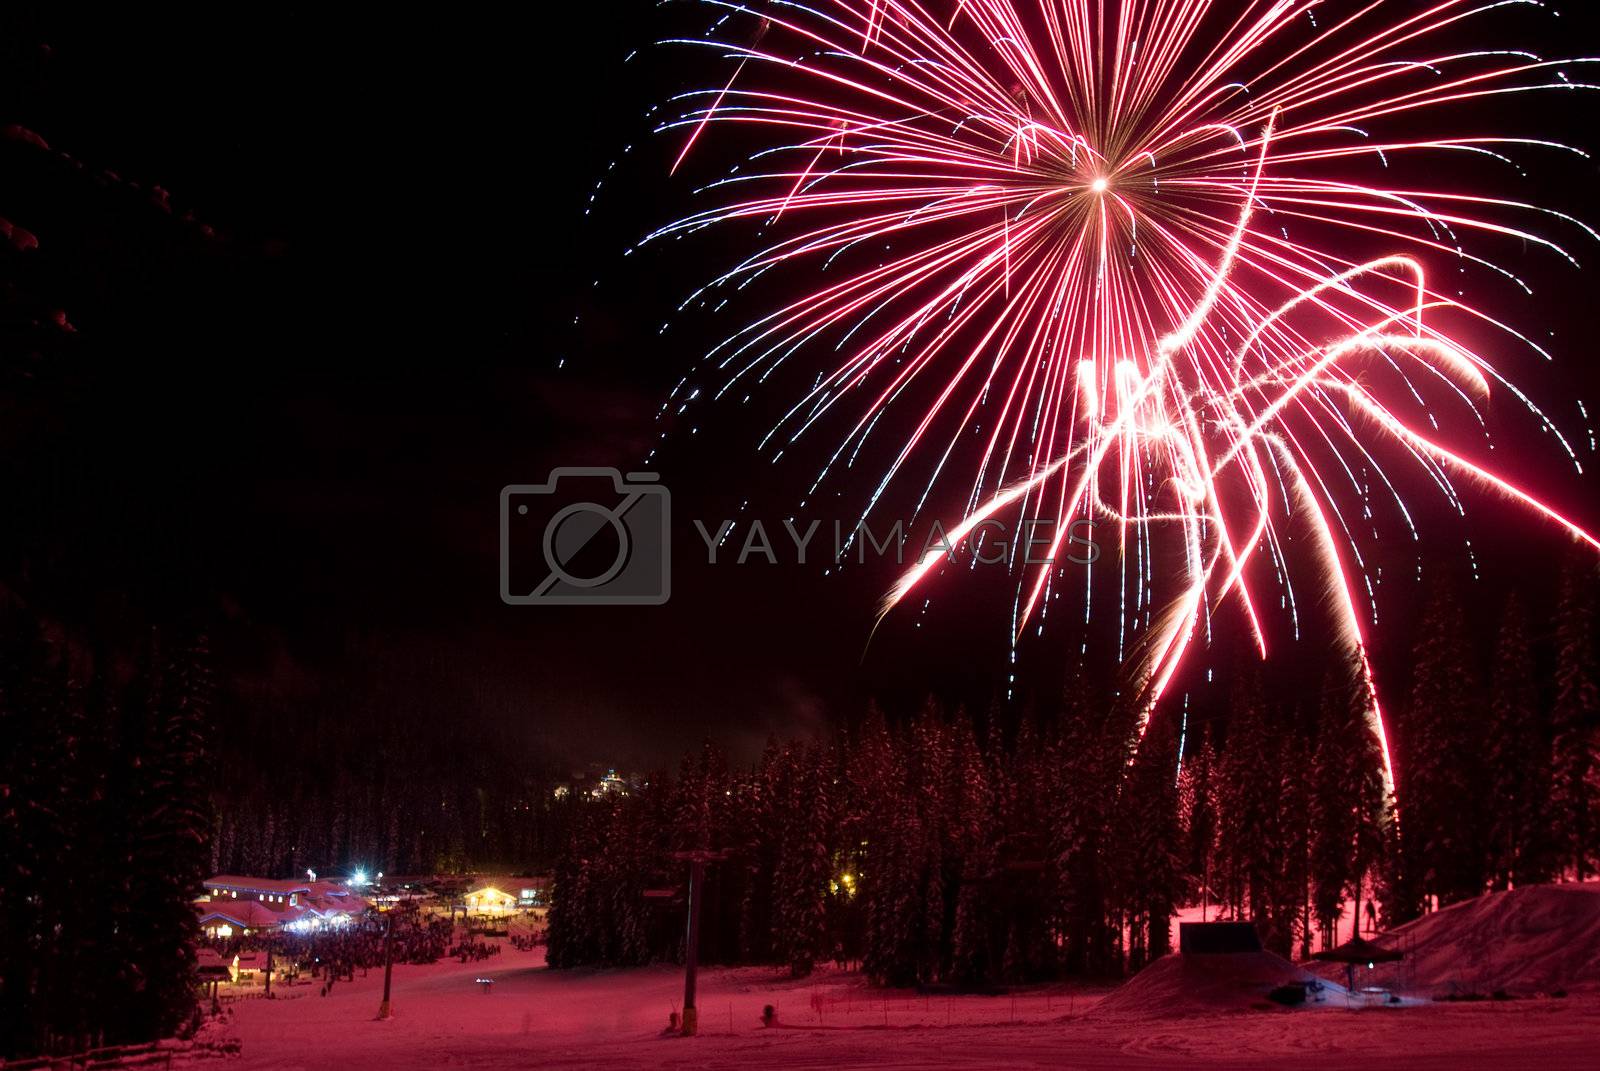 Royalty free image of Fireworks at a ski resort in British Columbia by edan